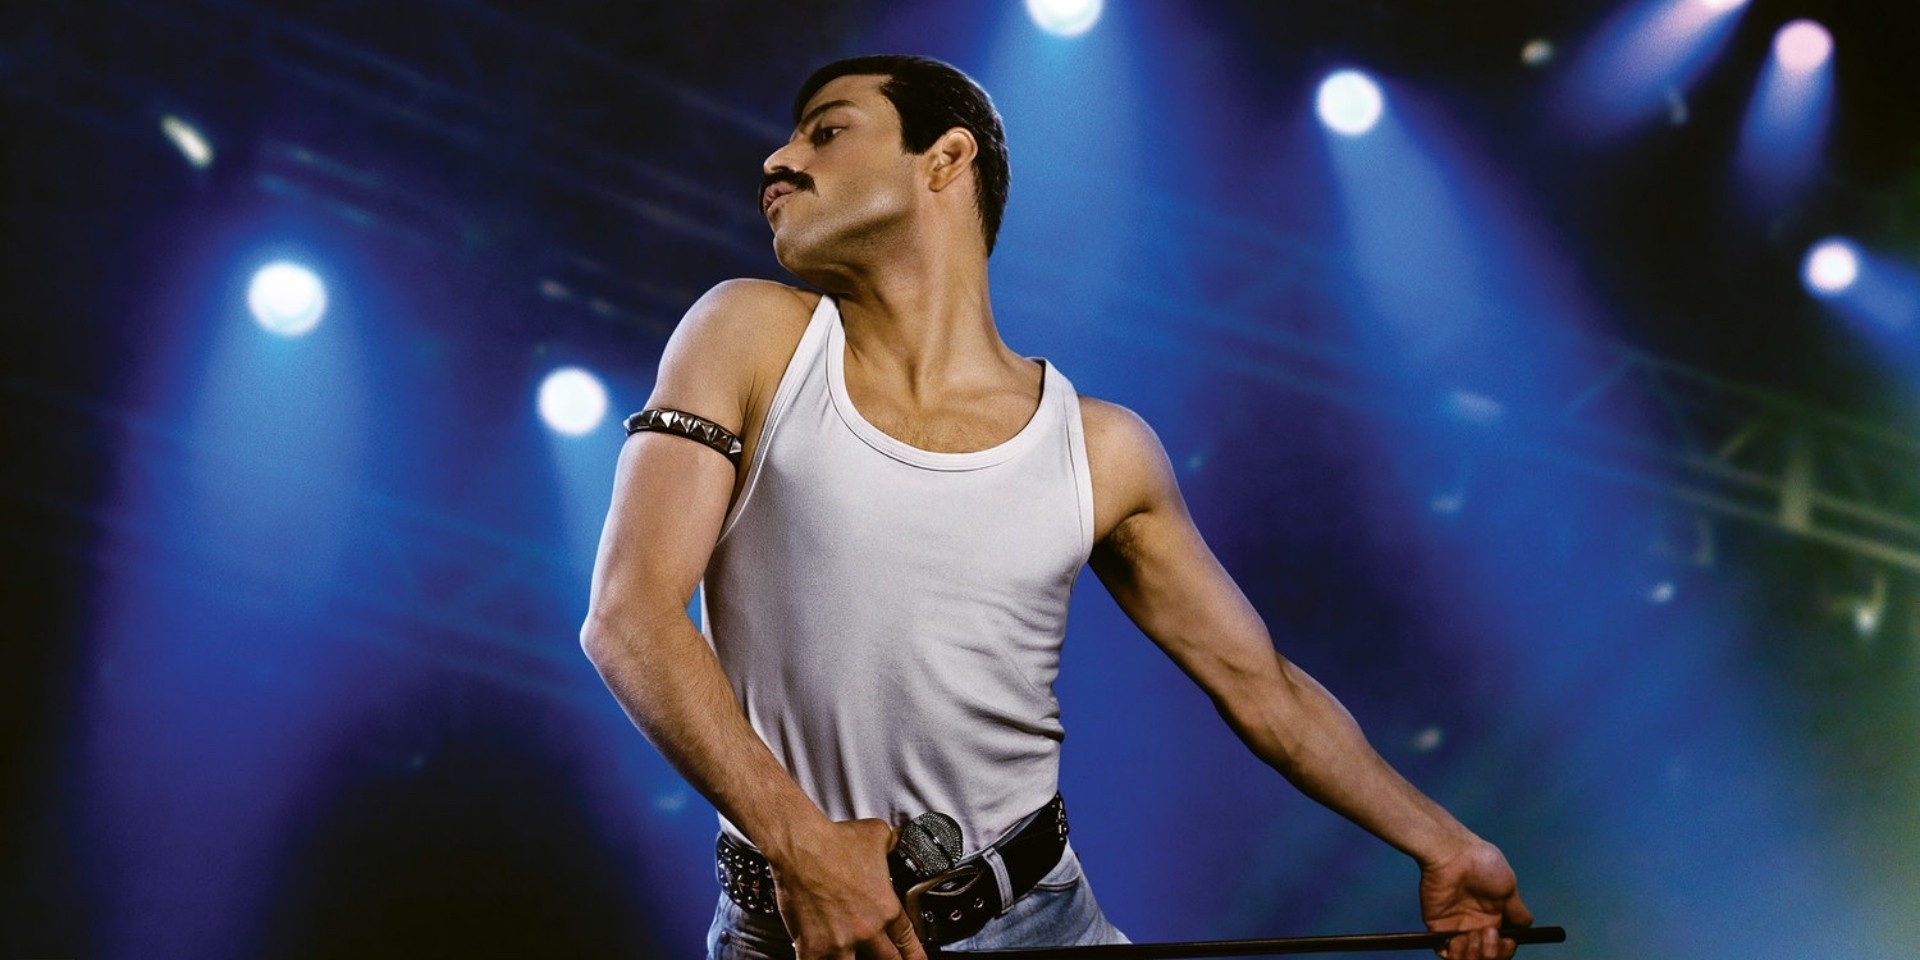 Tracklist for Queen biopic Bohemian Rhapsody revealed